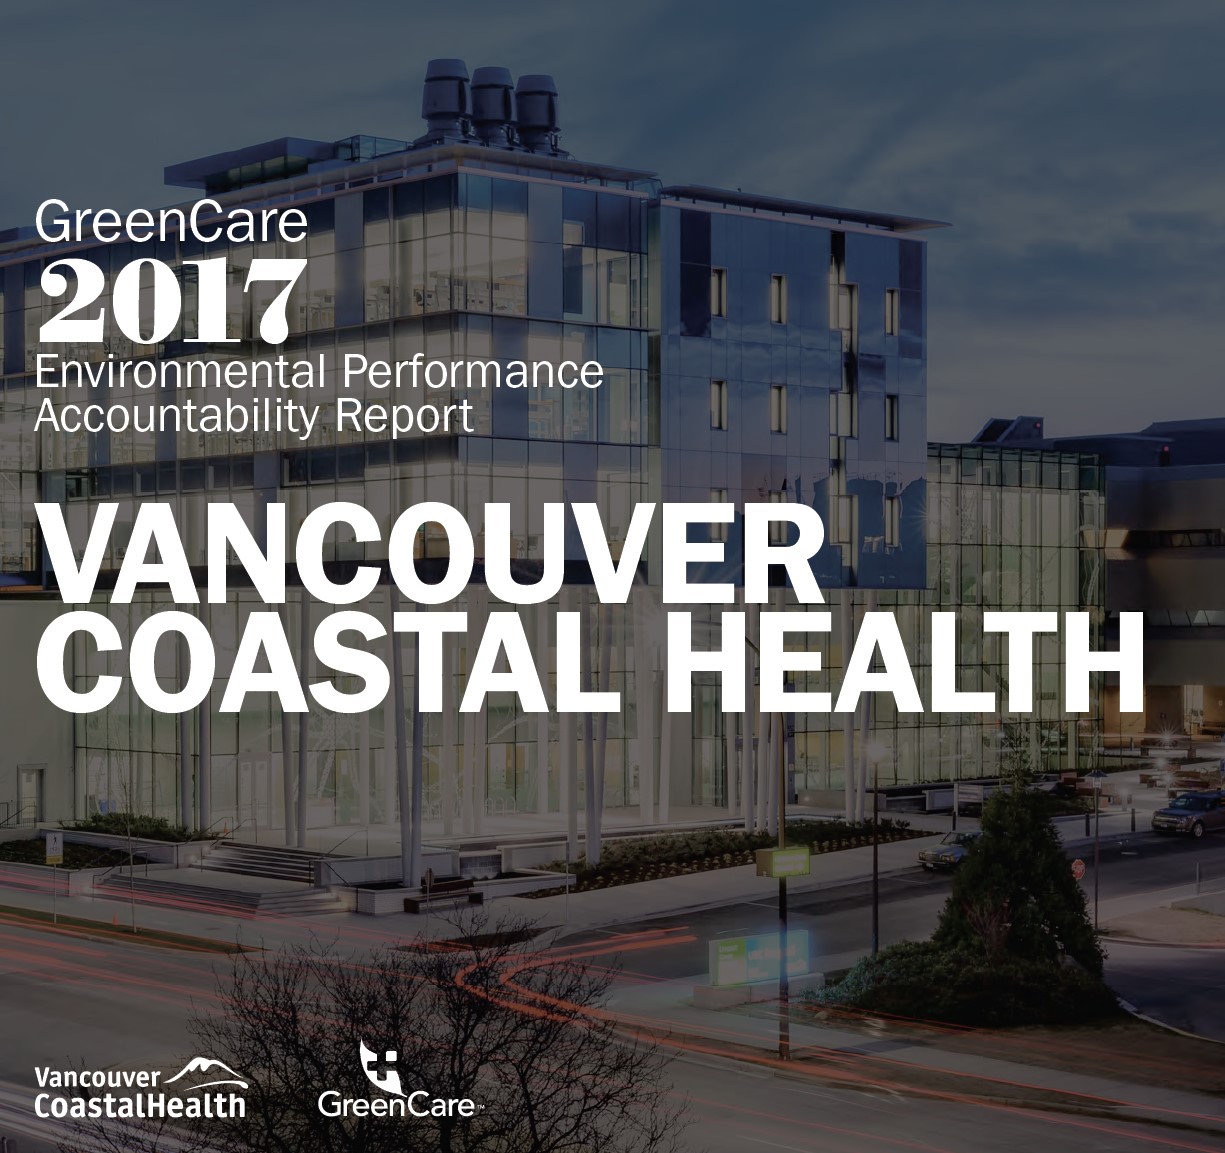 2017 Environmental Performance Accountability Report for Vancouver Coastal Health